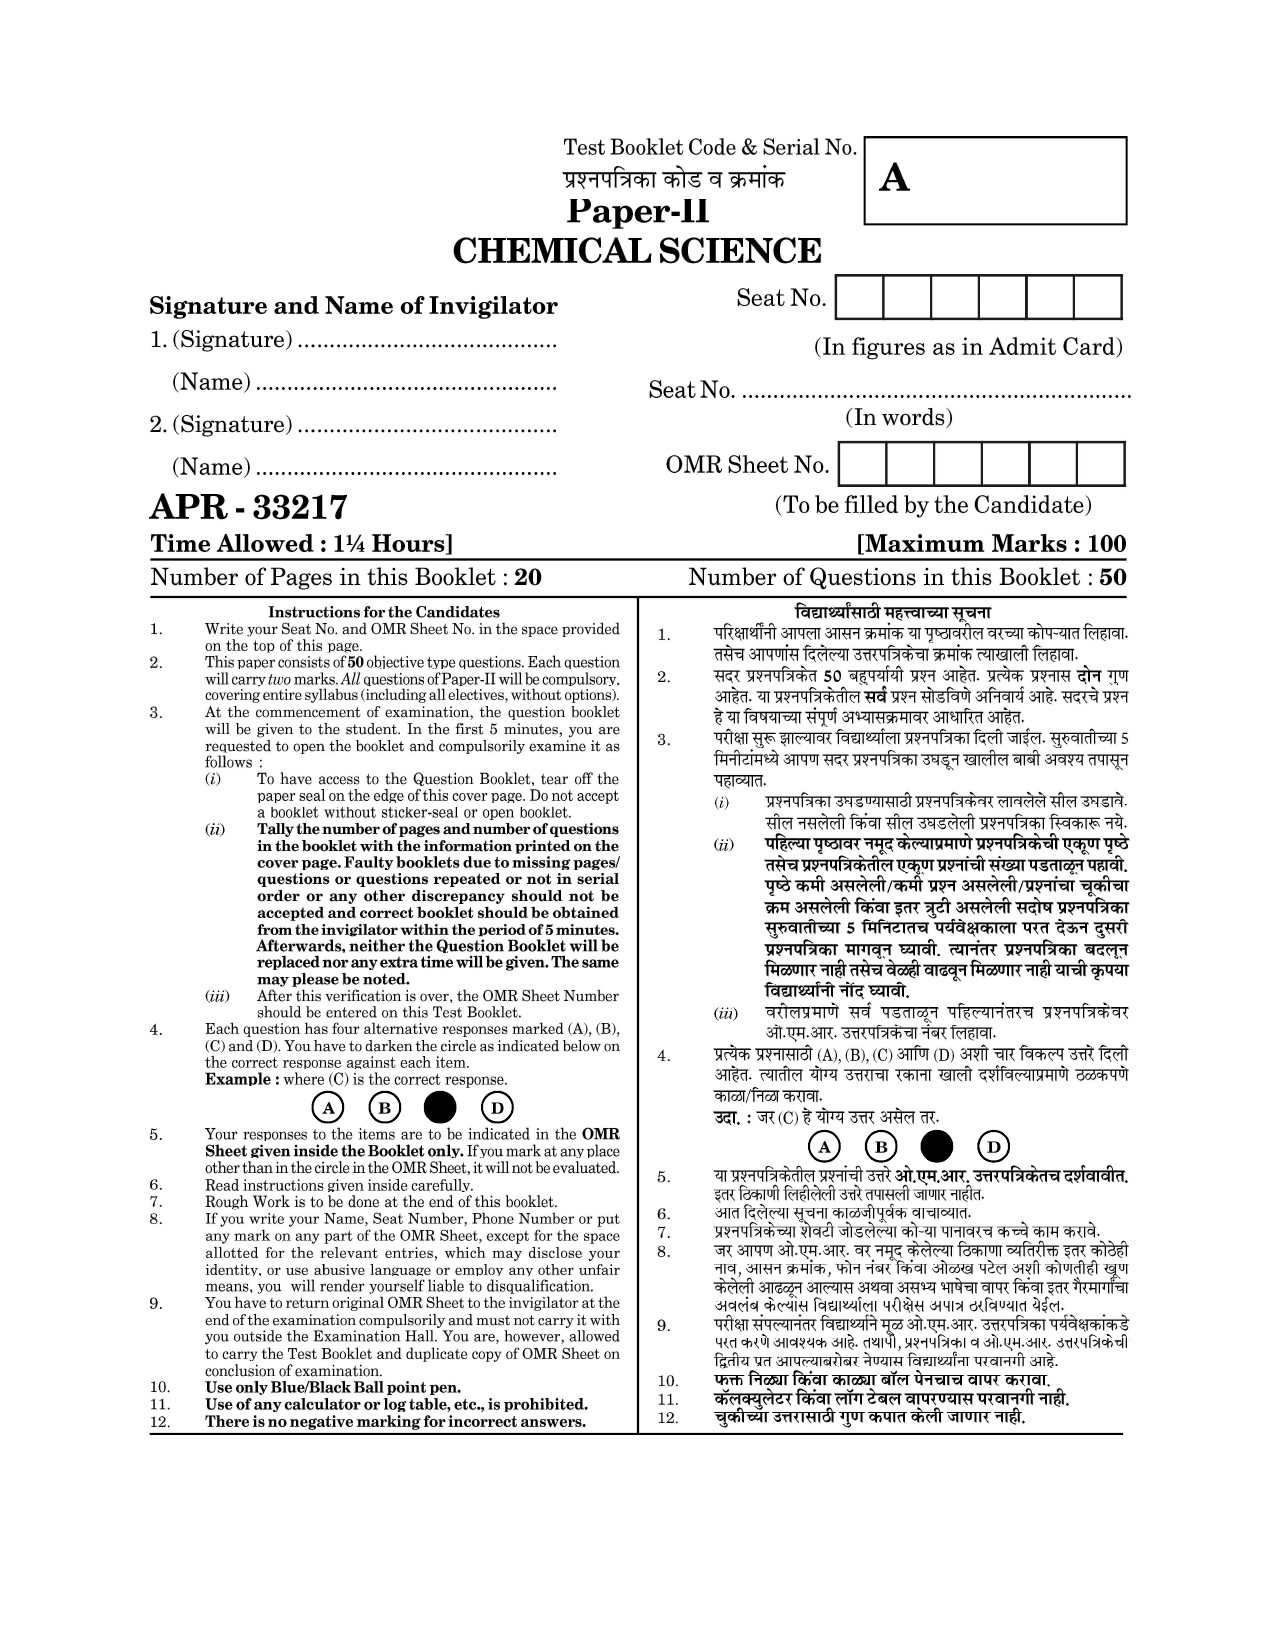 Maharashtra SET Chemical Sciences Question Paper II April 2017 1